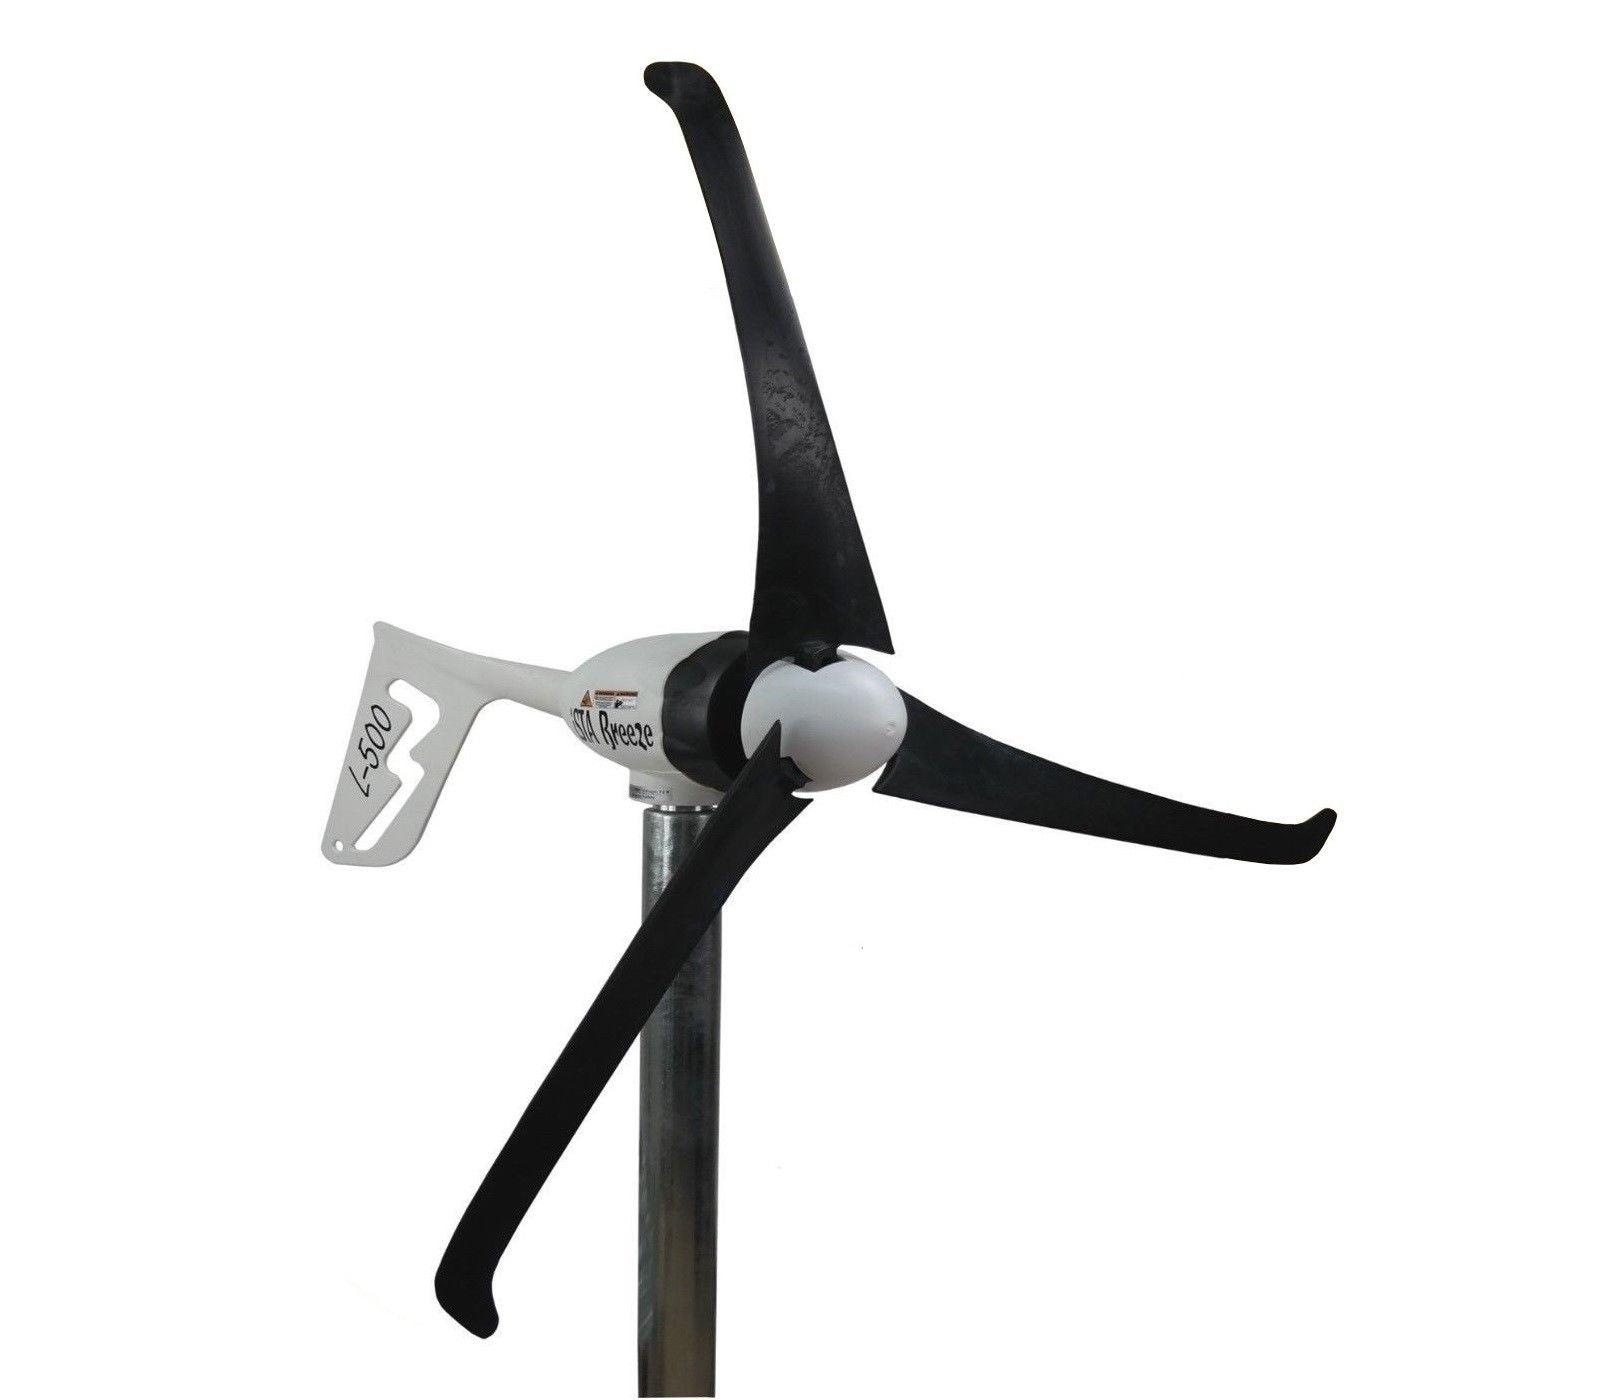 24V Windkraftanlage Windturbine Windgenerator Windrad MPPT Lade in